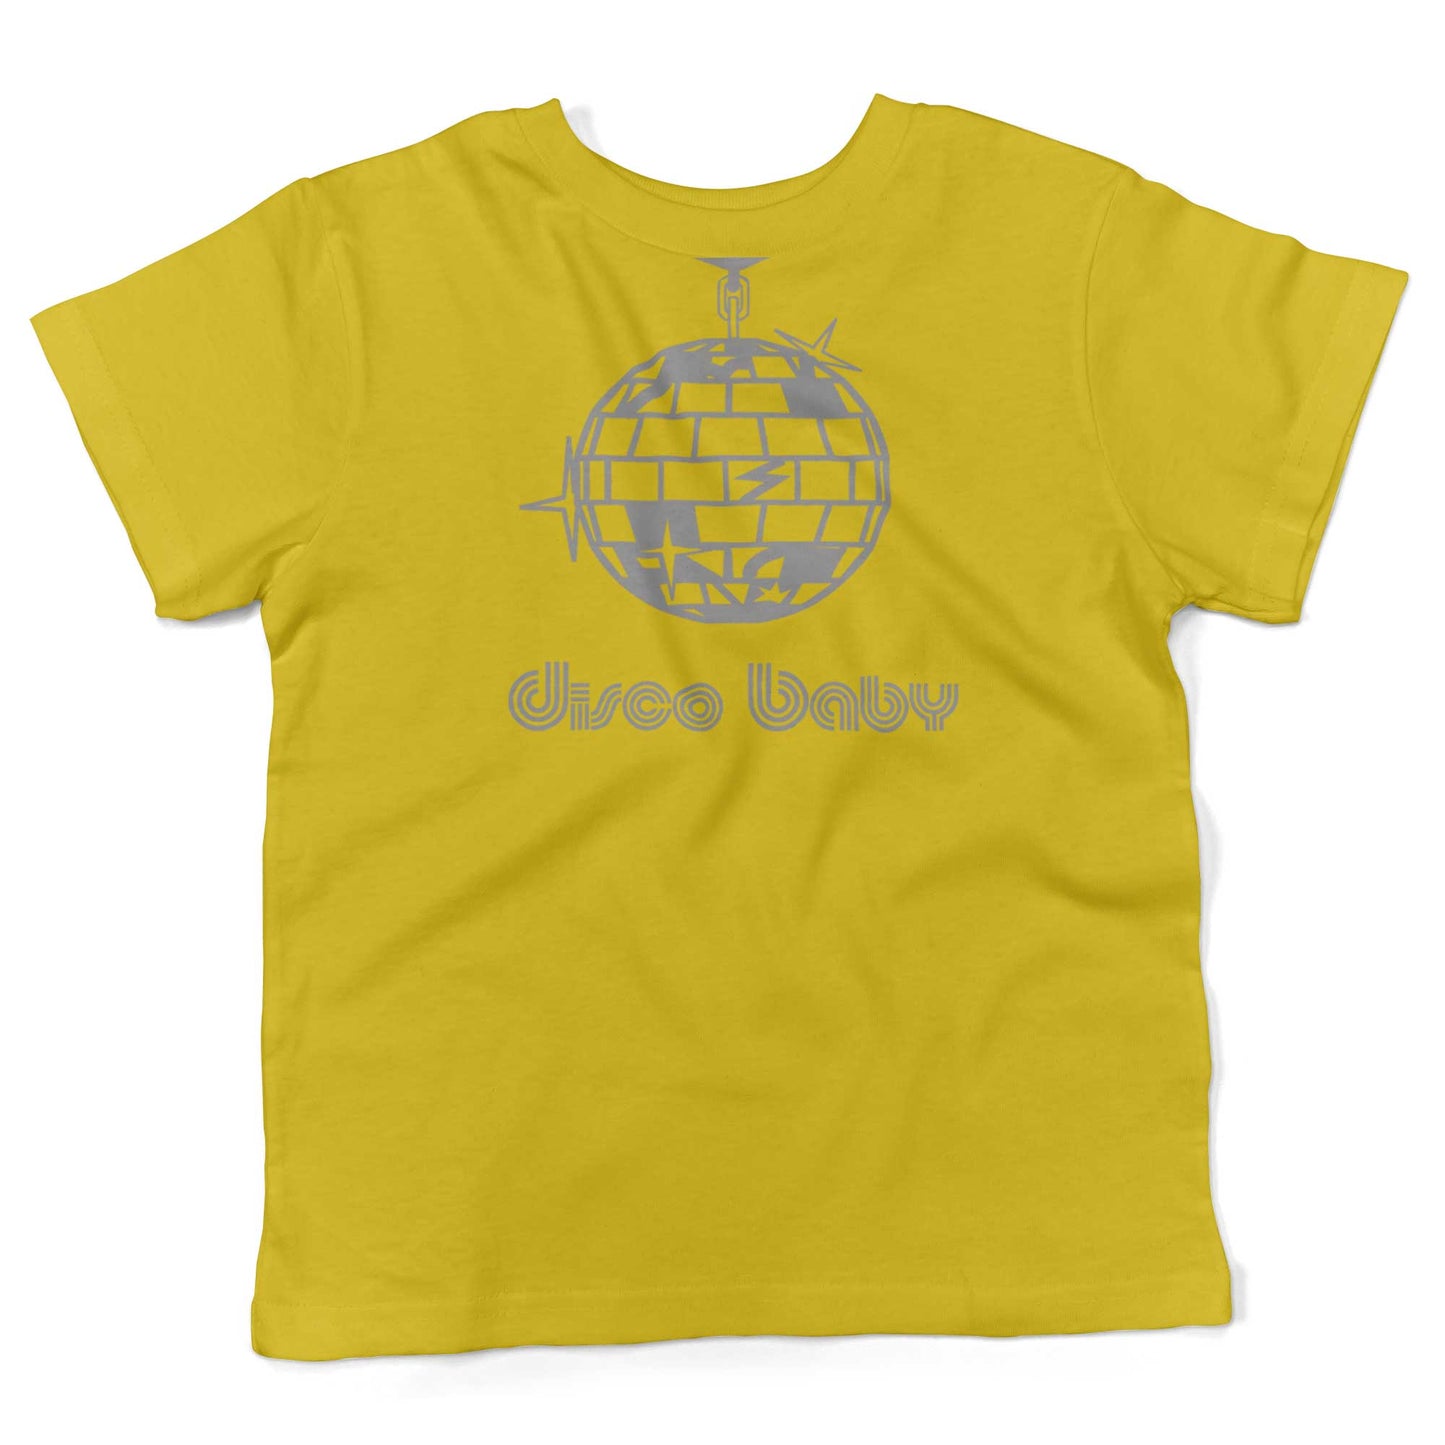 Disco Baby Toddler Shirt-Sunshine Yellow-2T